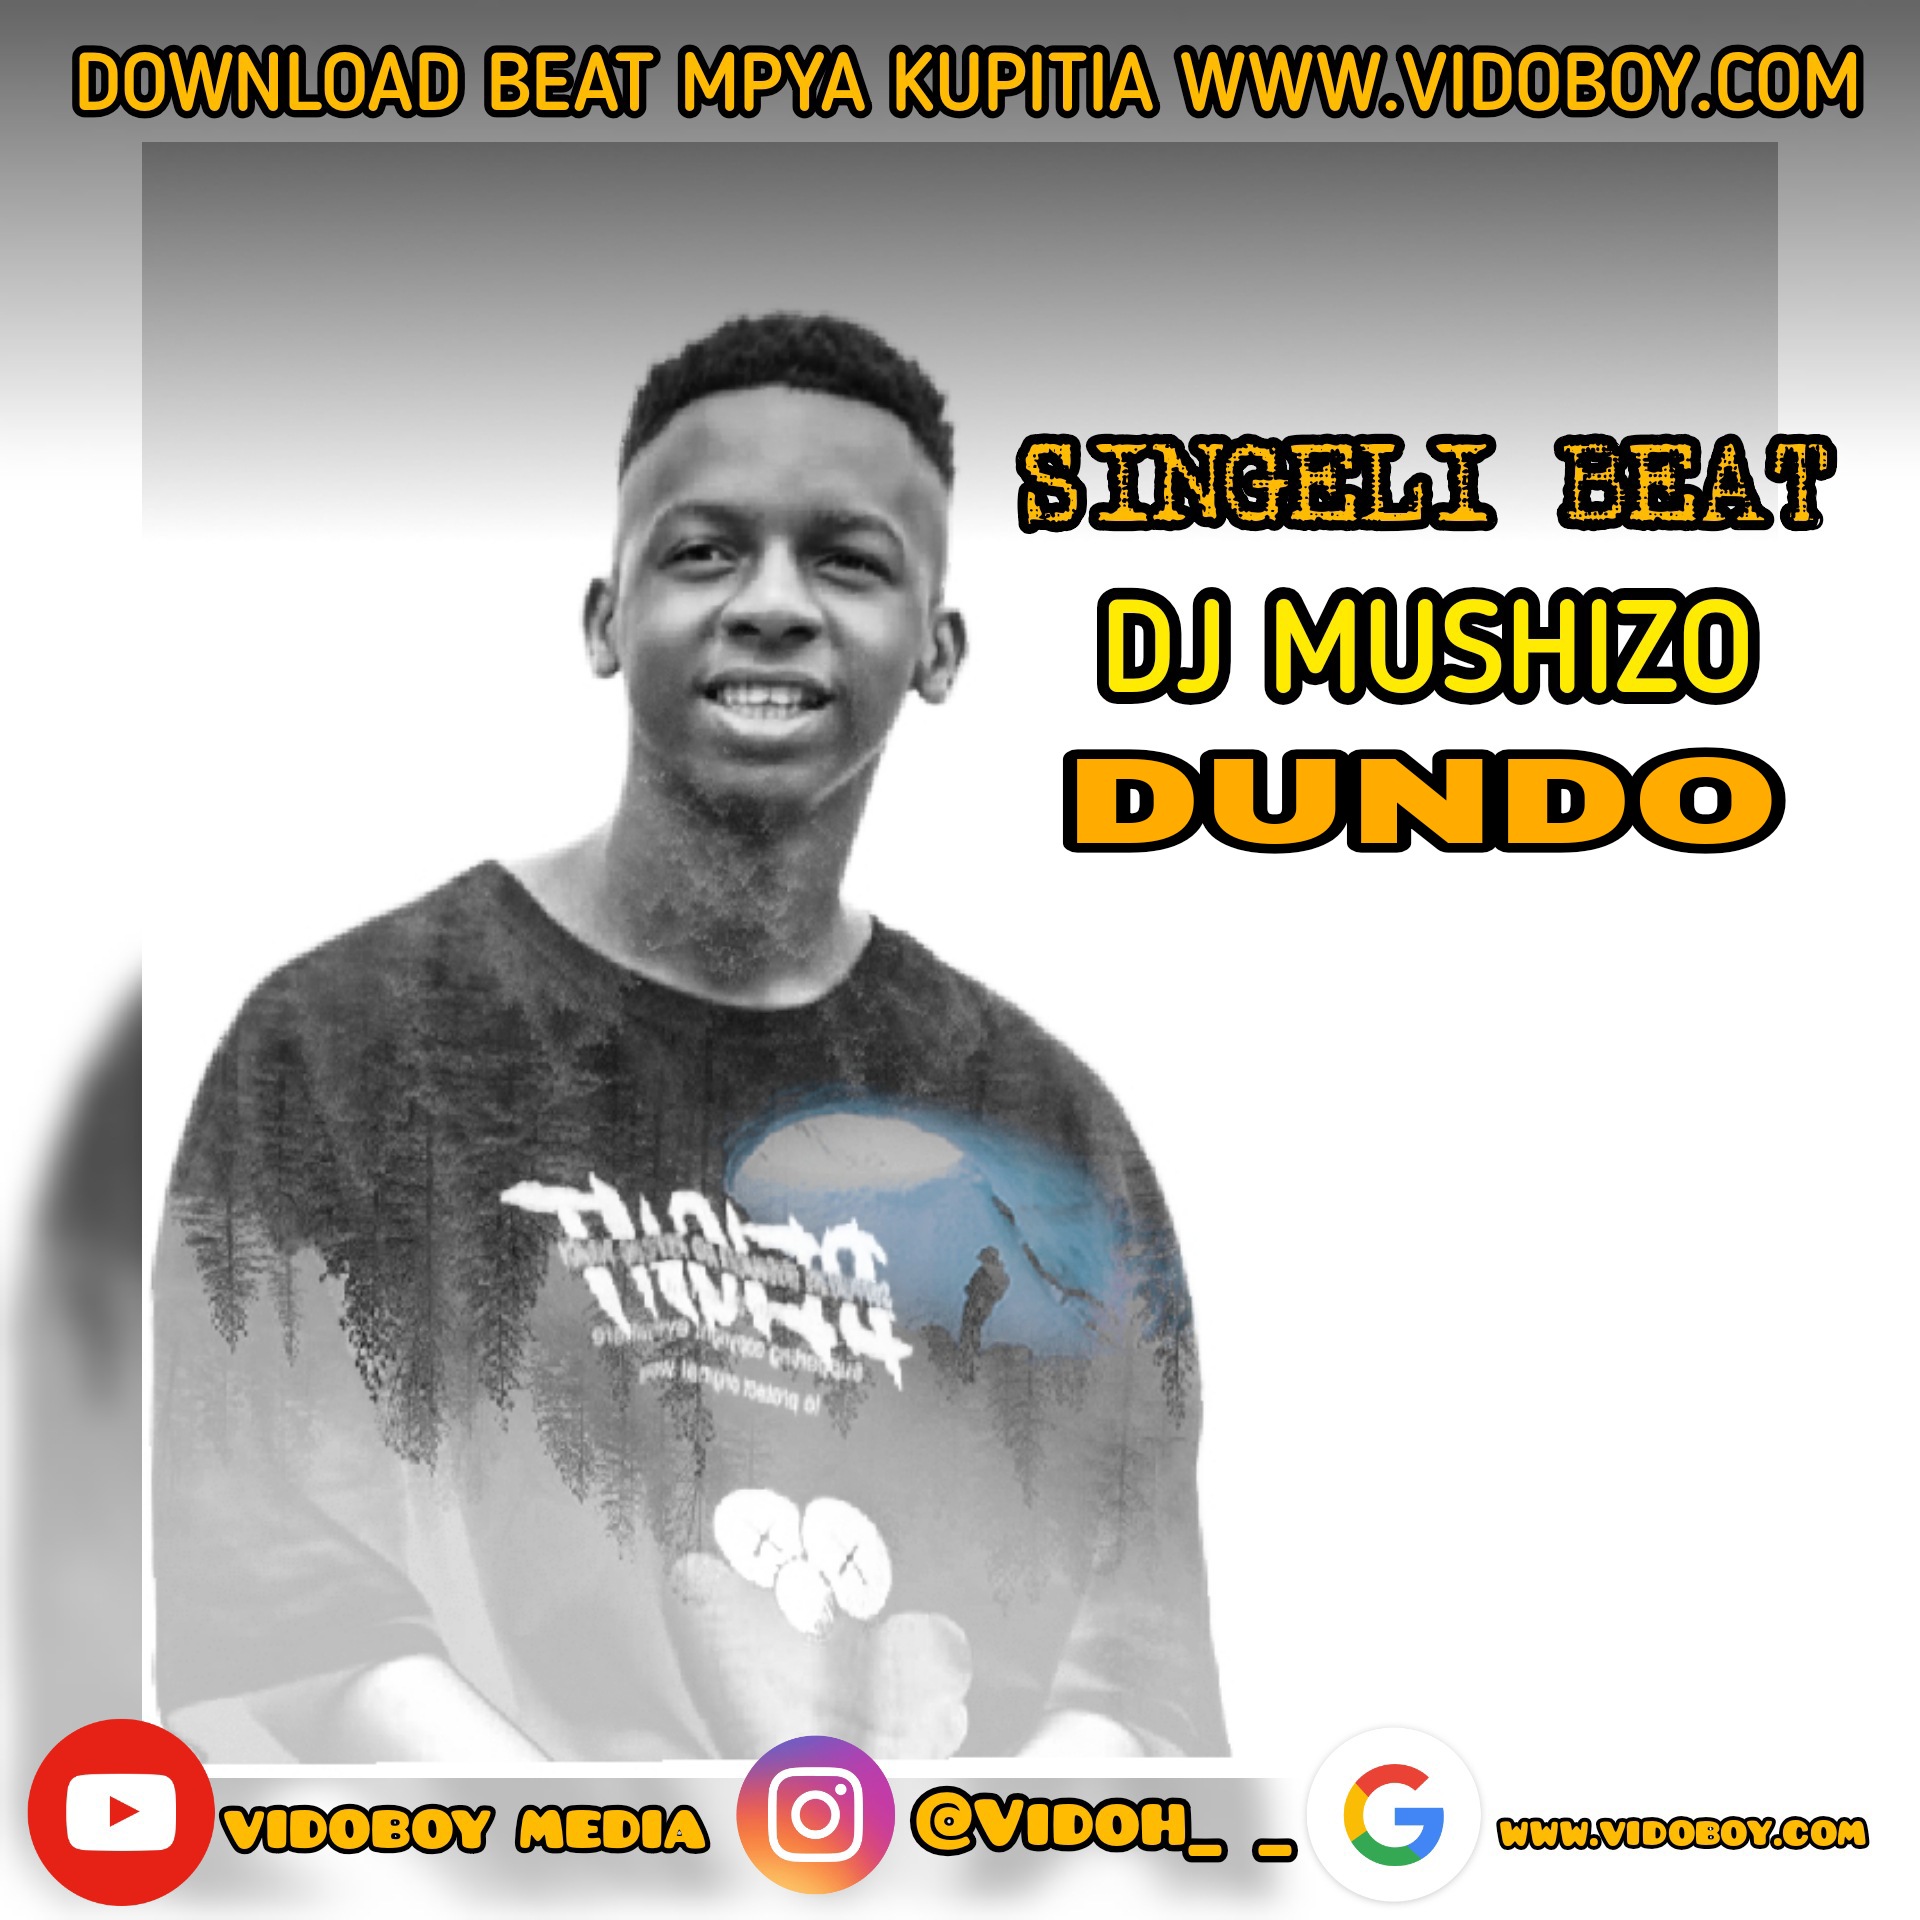 Beat Singeli Dj Mushizo Dundo Mp3 Download 